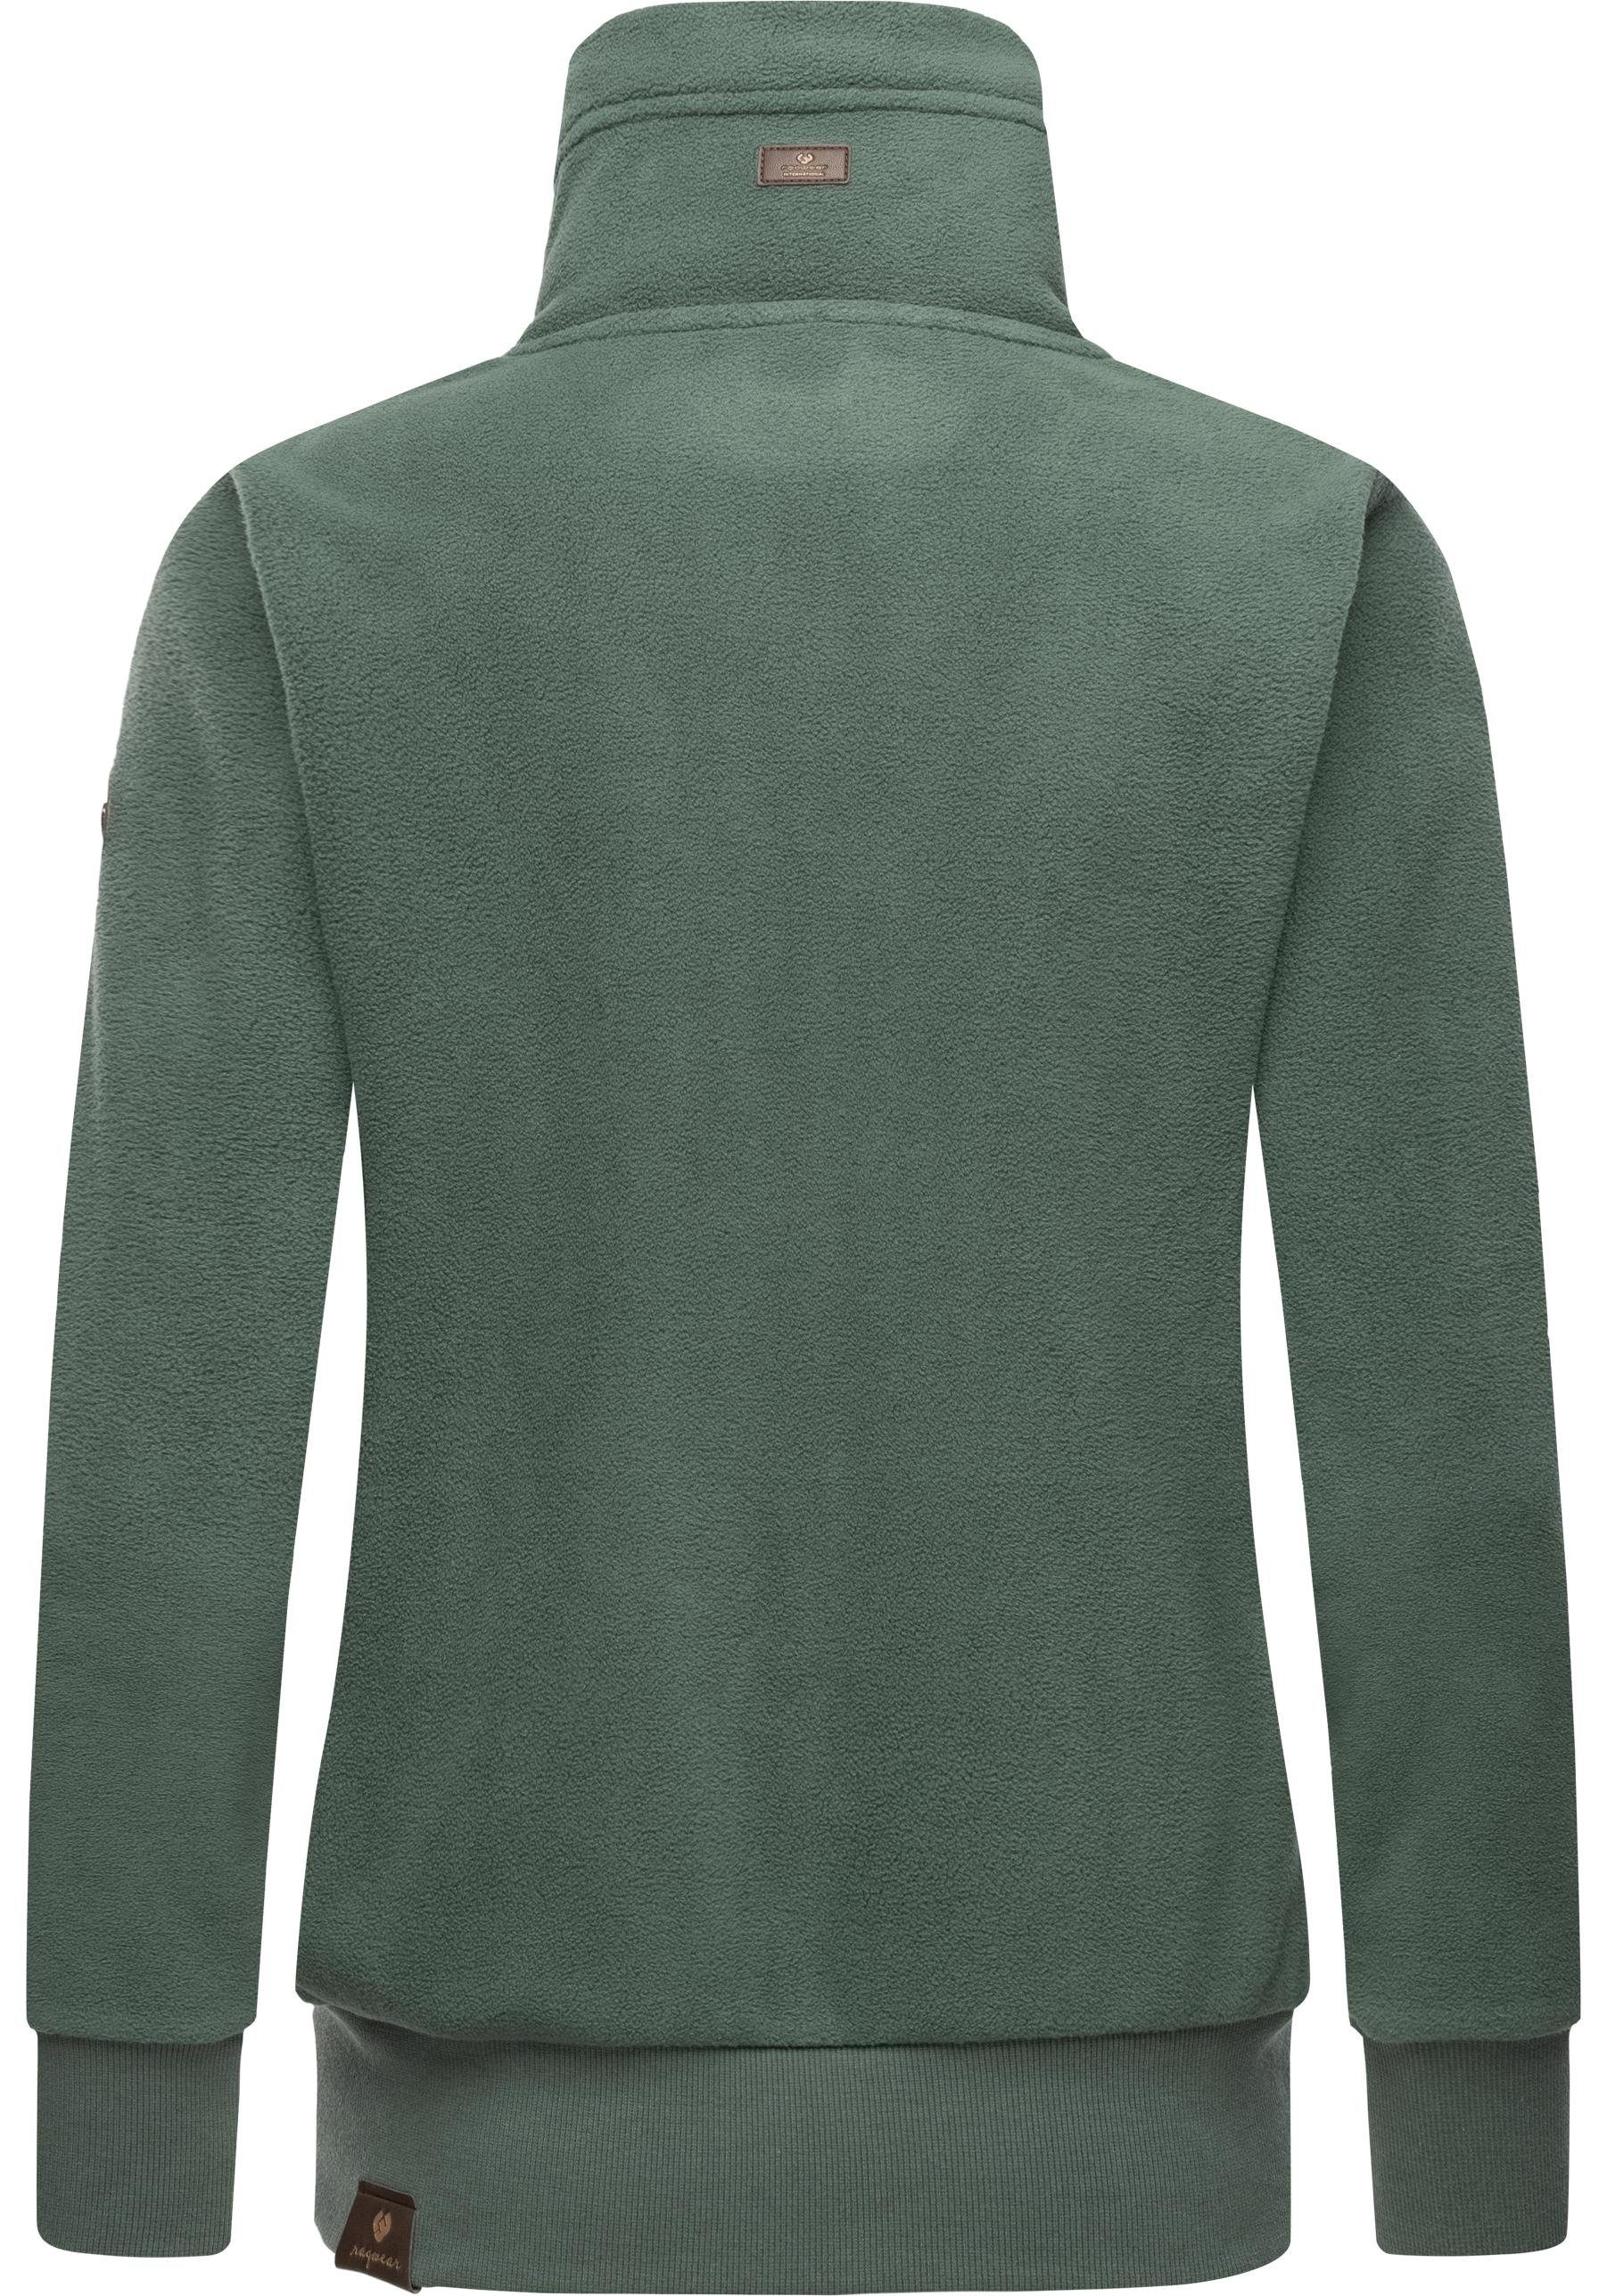 Fleece Zip-Sweater weicher Rylie Ragwear Solid Kordeln Sweatjacke tannengrün Fleece mit Zip